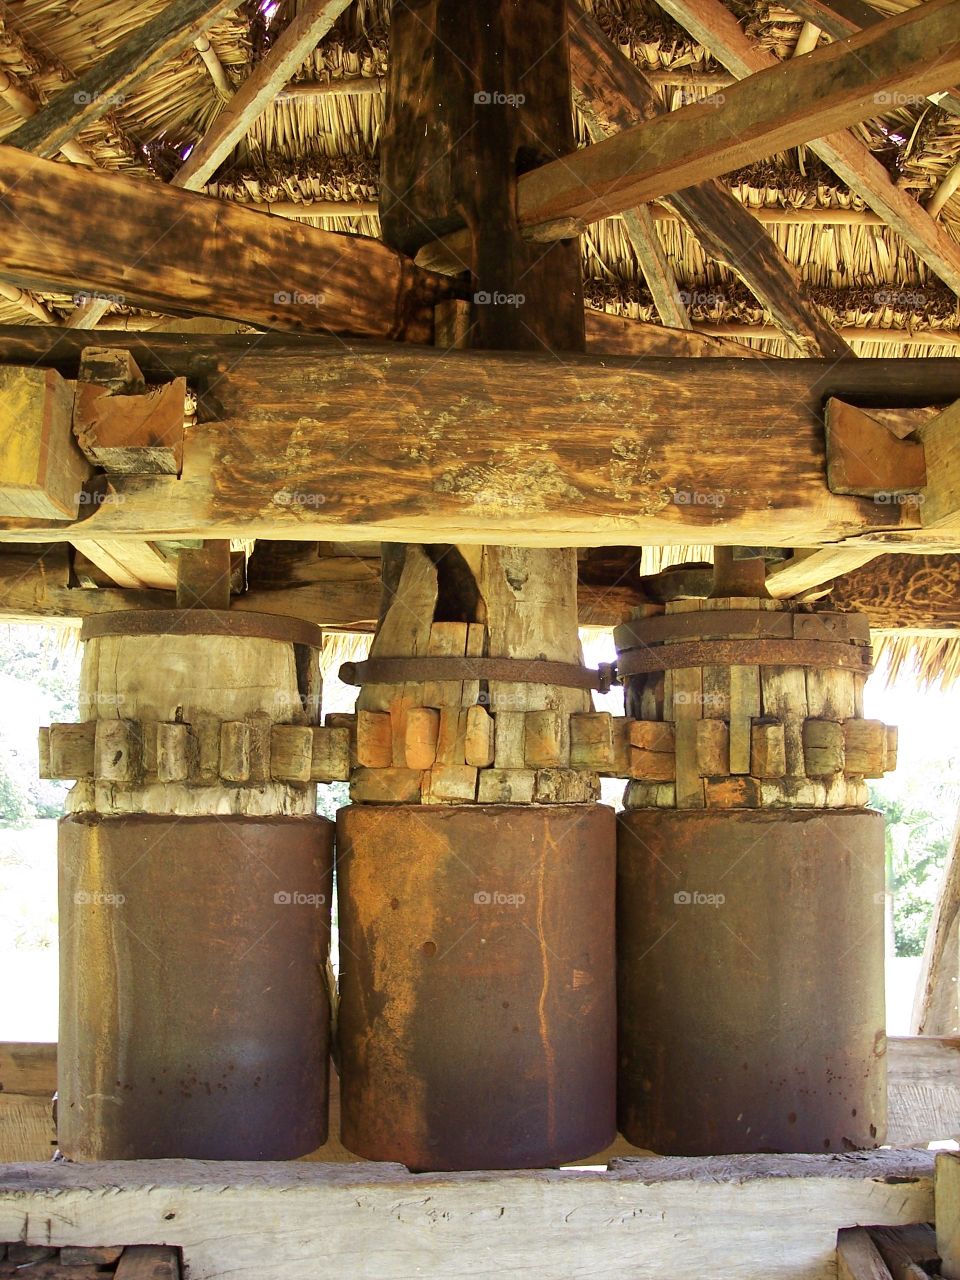 Grinding wheel for grinding sugar cane